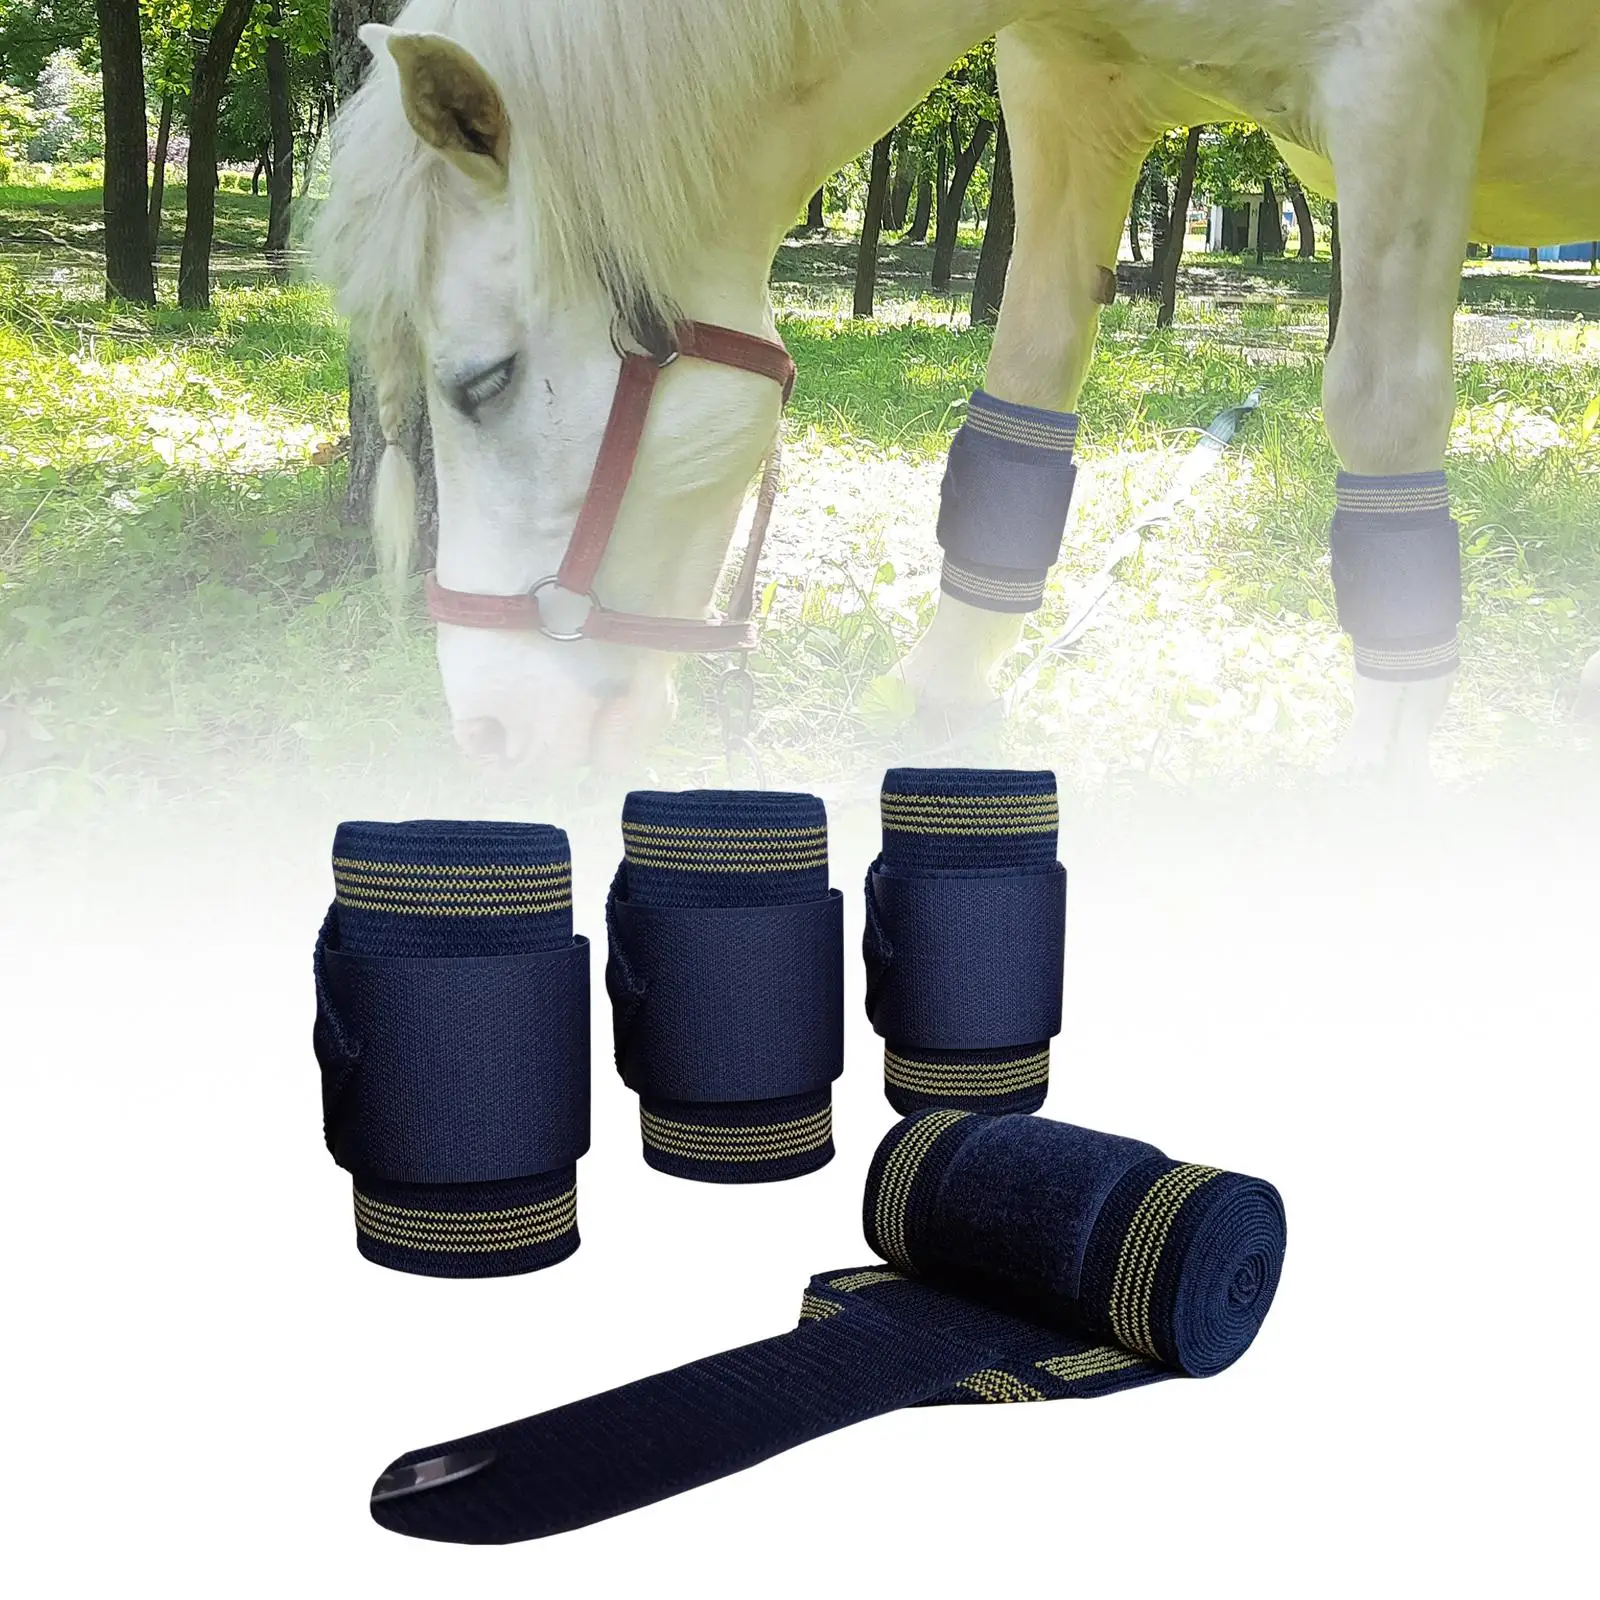 4 Pieces Horse Leg Wraps Leg Guards Horse Leg Protection Sticky Strap for